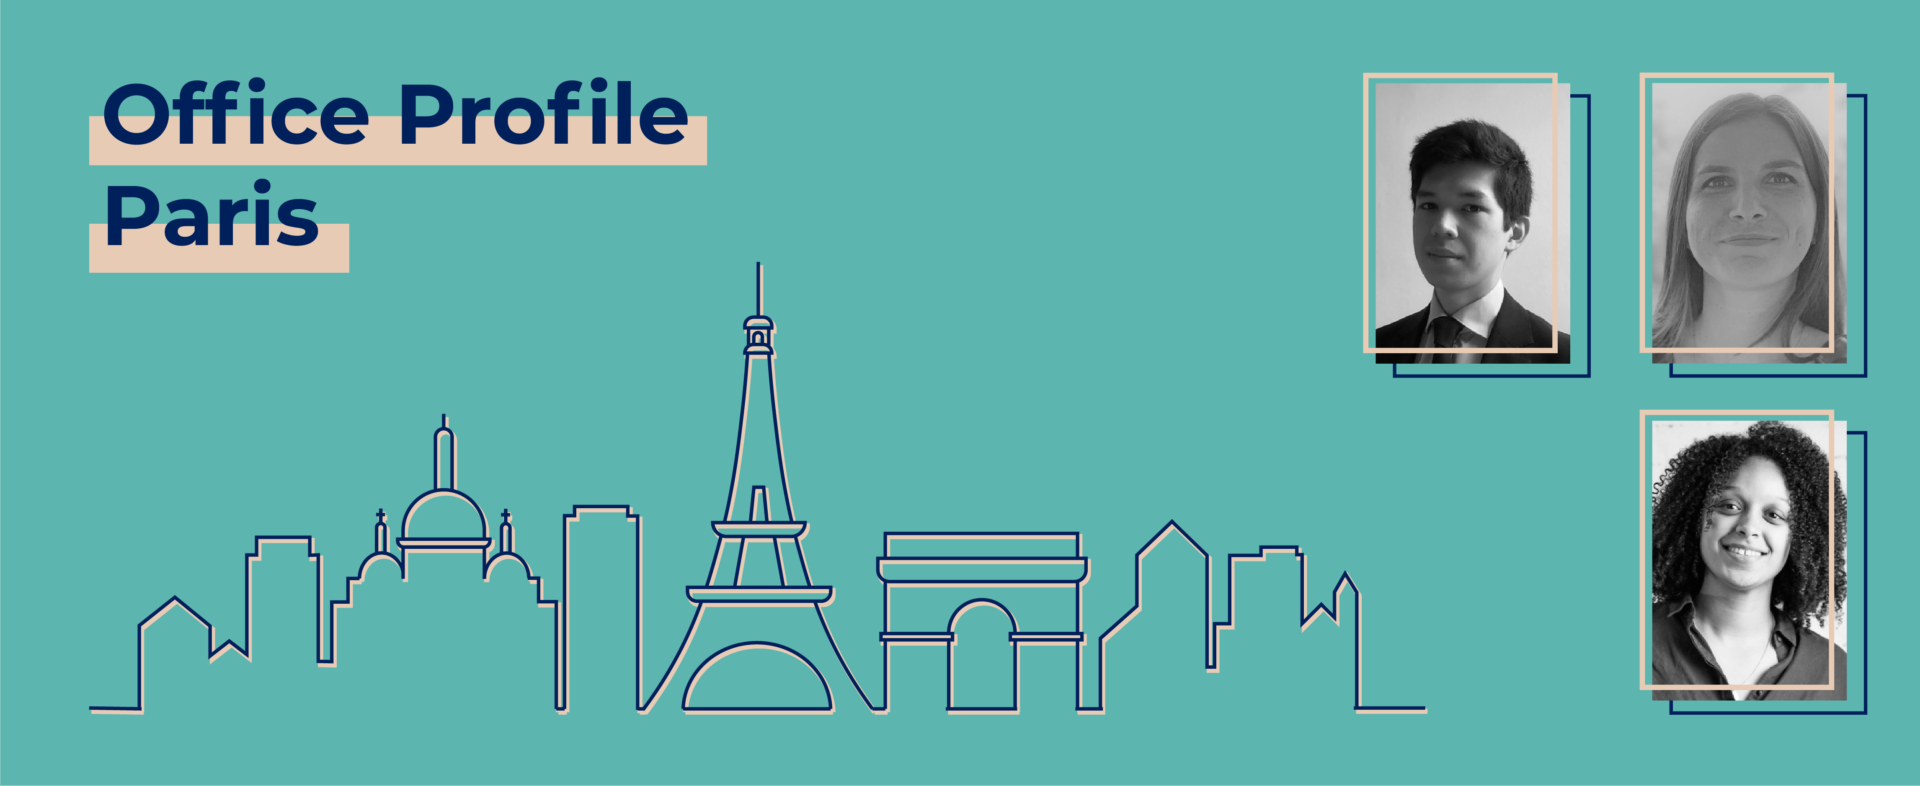 Office Profile: Paris